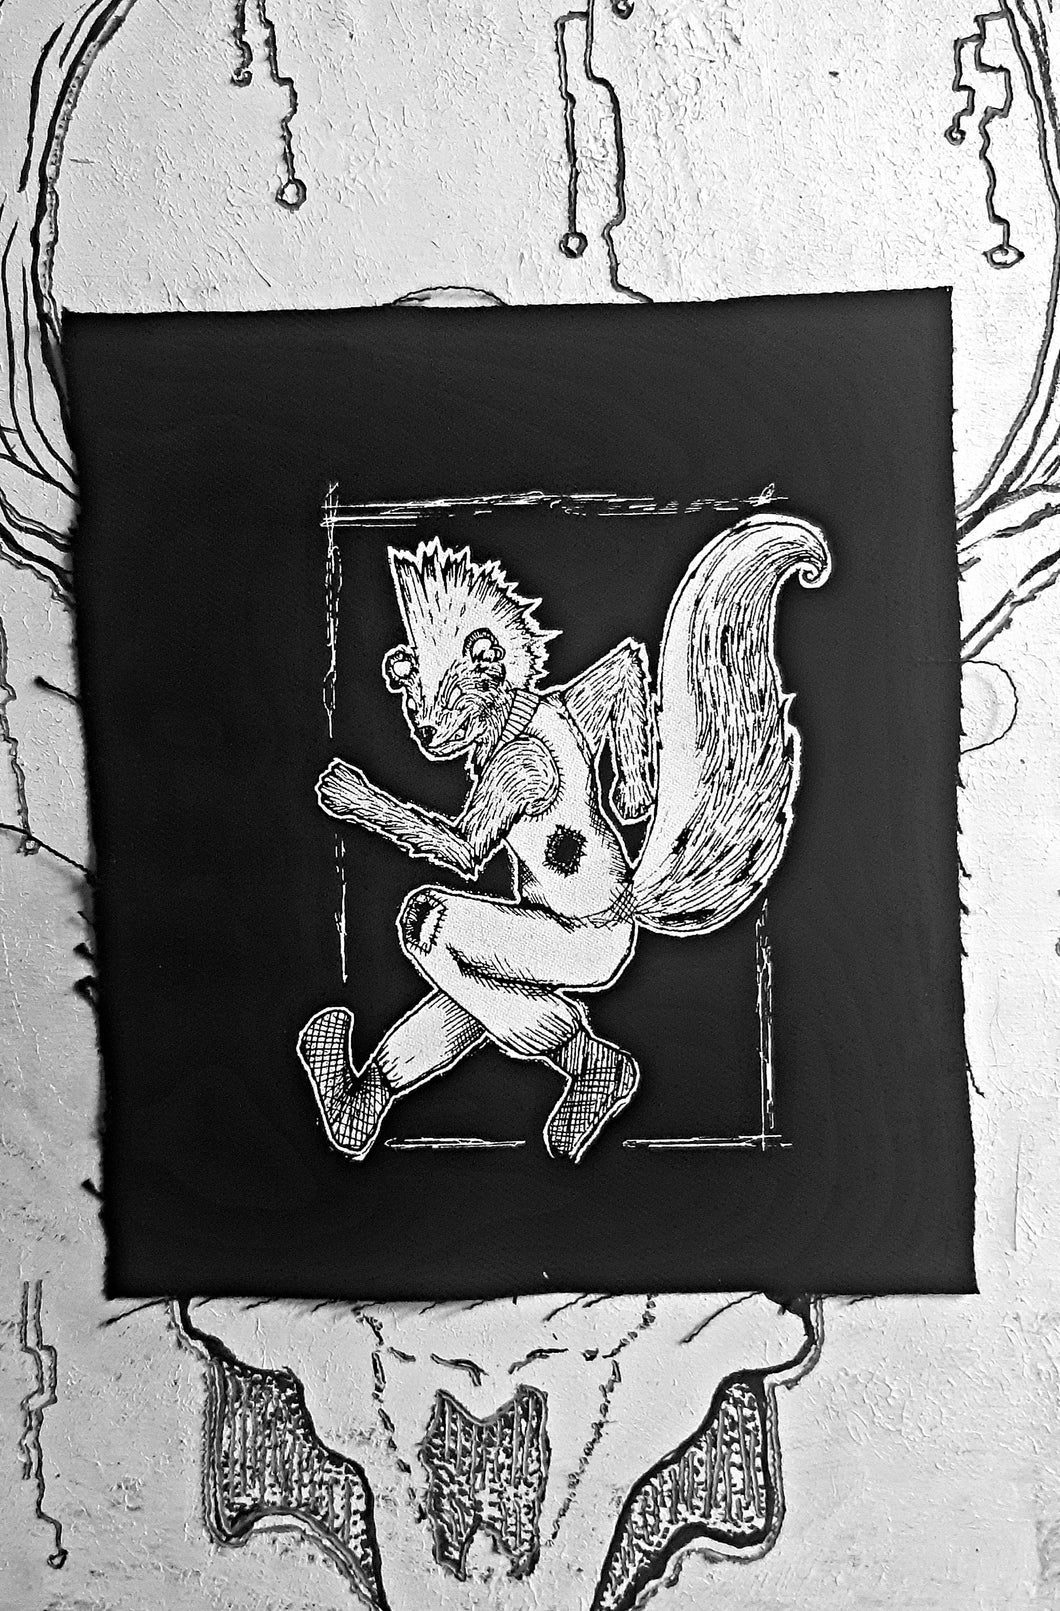 Skanking skunk ska-punk patch -  Screen printing on black fabric